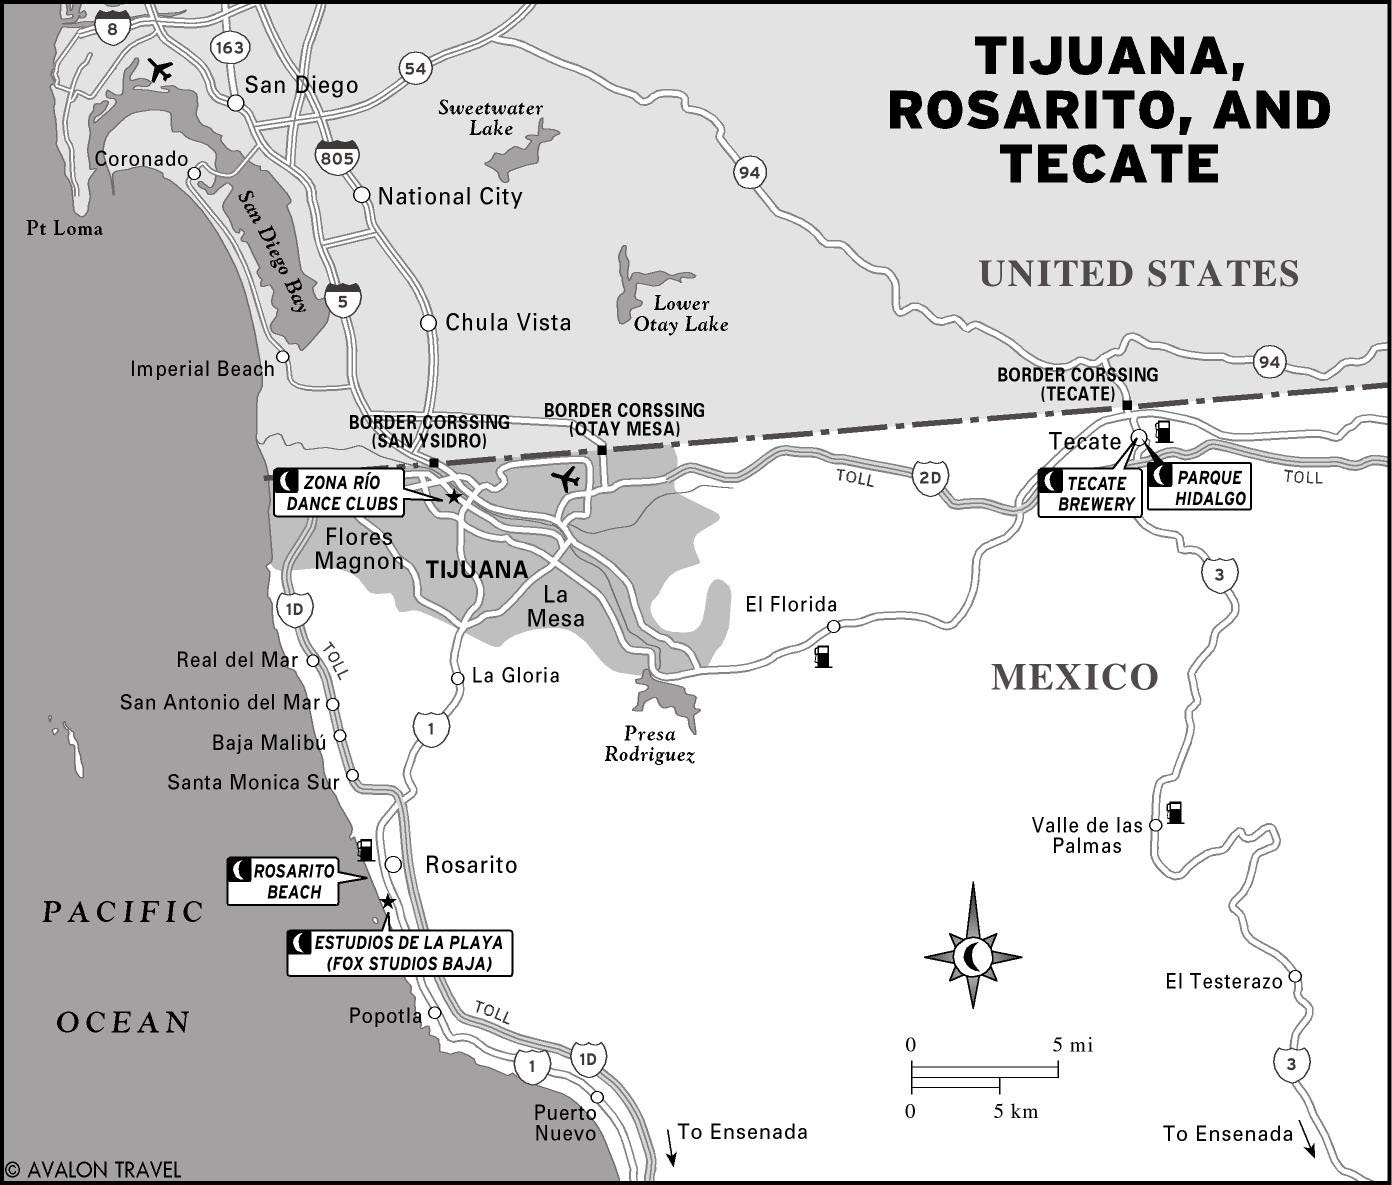 Map of Tijuana, Rosarito, and Tecate Mexico